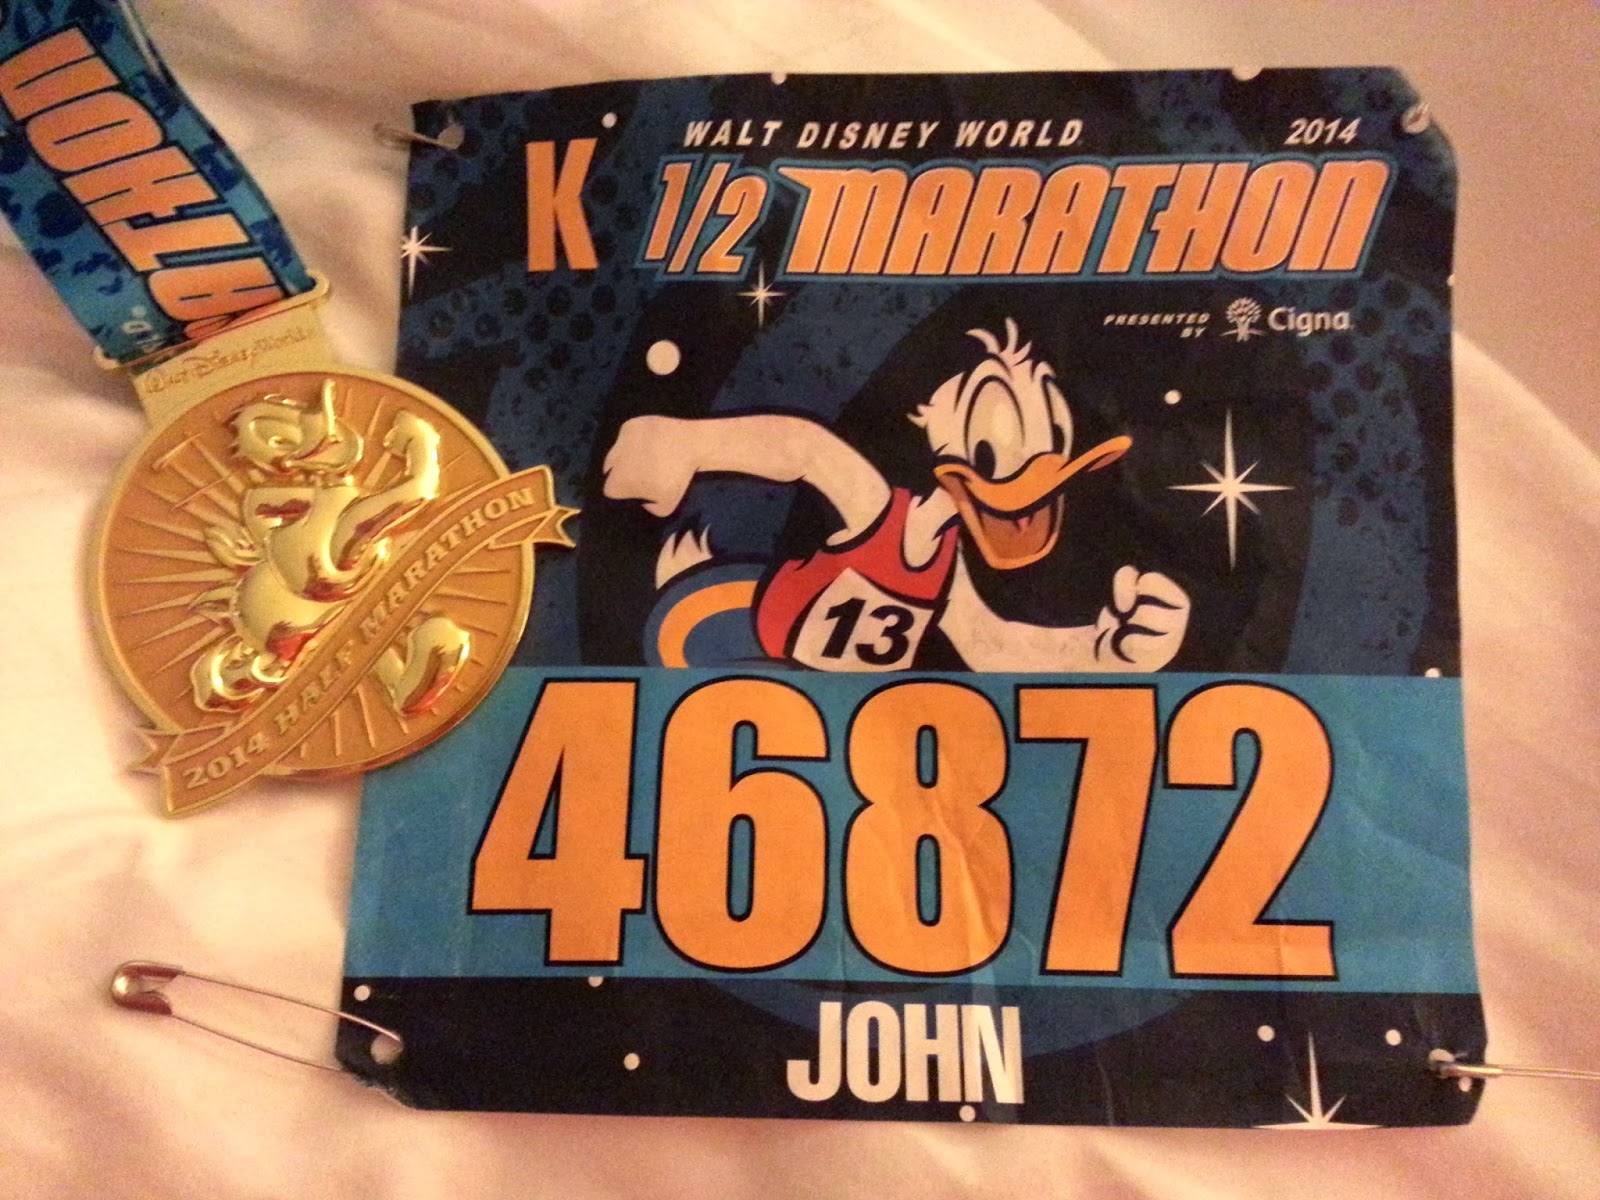 WDW 1/2 Marathon bib and medal